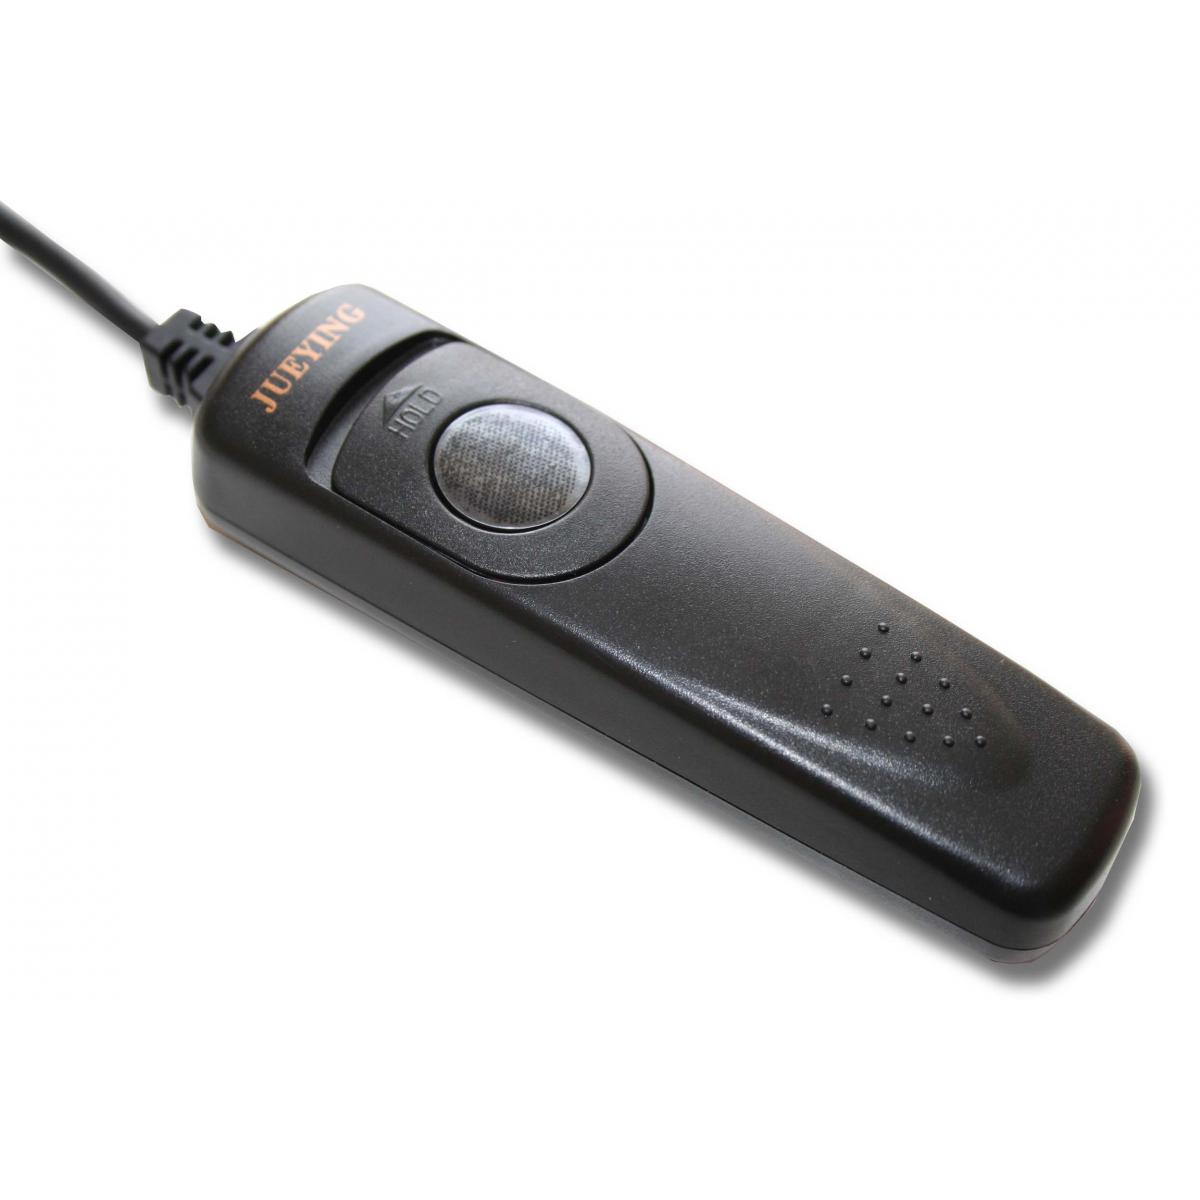 Vhbw - vhbw Telecommande portable Câble compatible avec Olympus Pen E-PL3, E-P5, E-PL7, E-PL6, E-PL5, E-PM2 Appareil Photo - Télécommande Photo et Vidéo